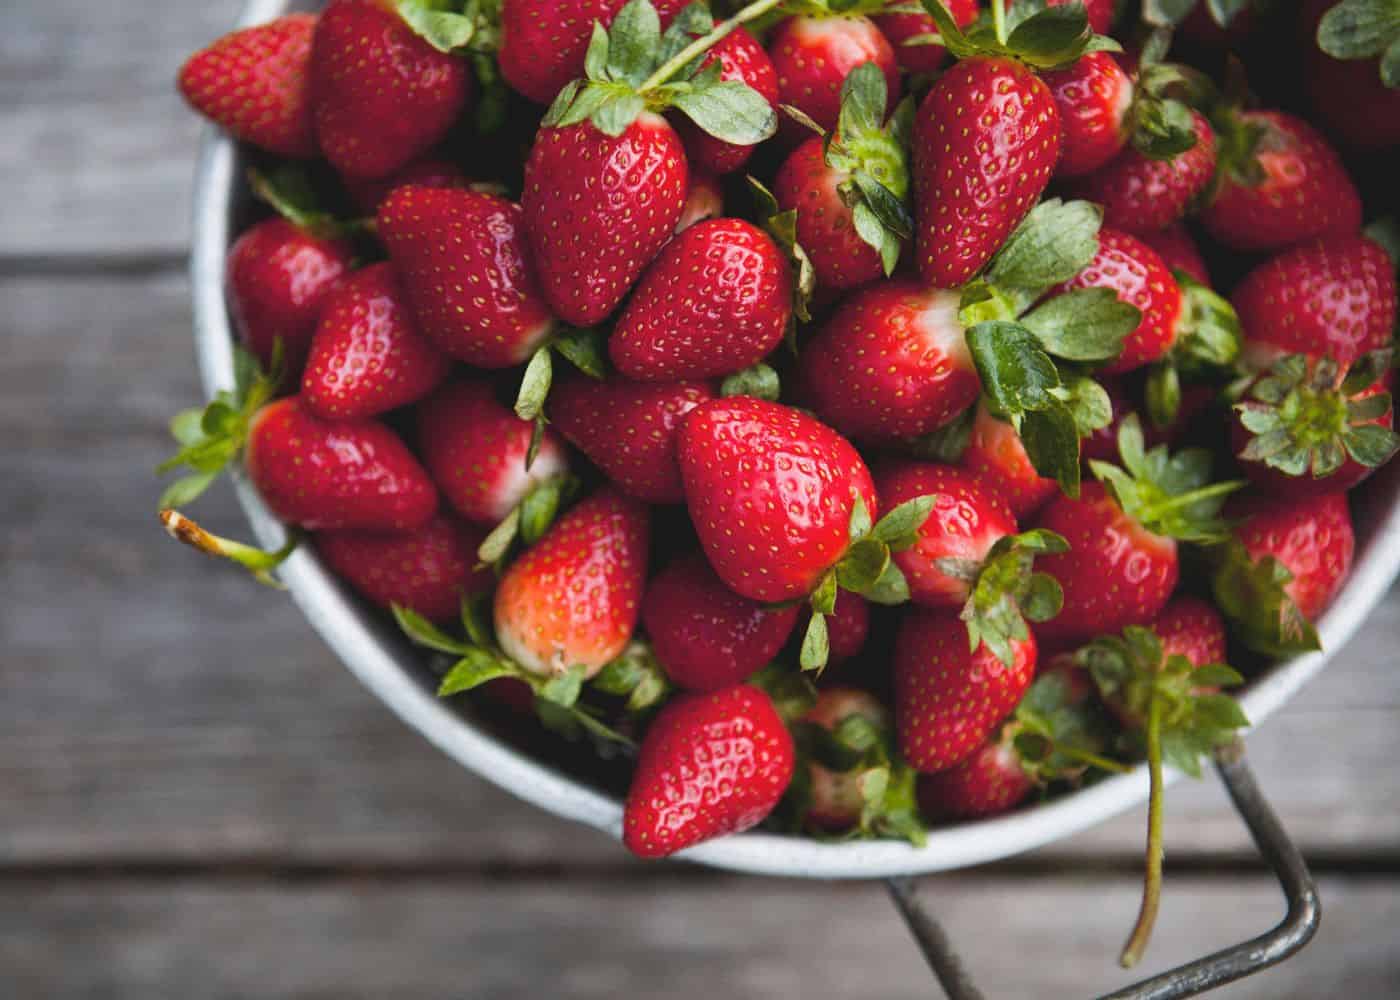 Best tasting strawberry varieties to plant